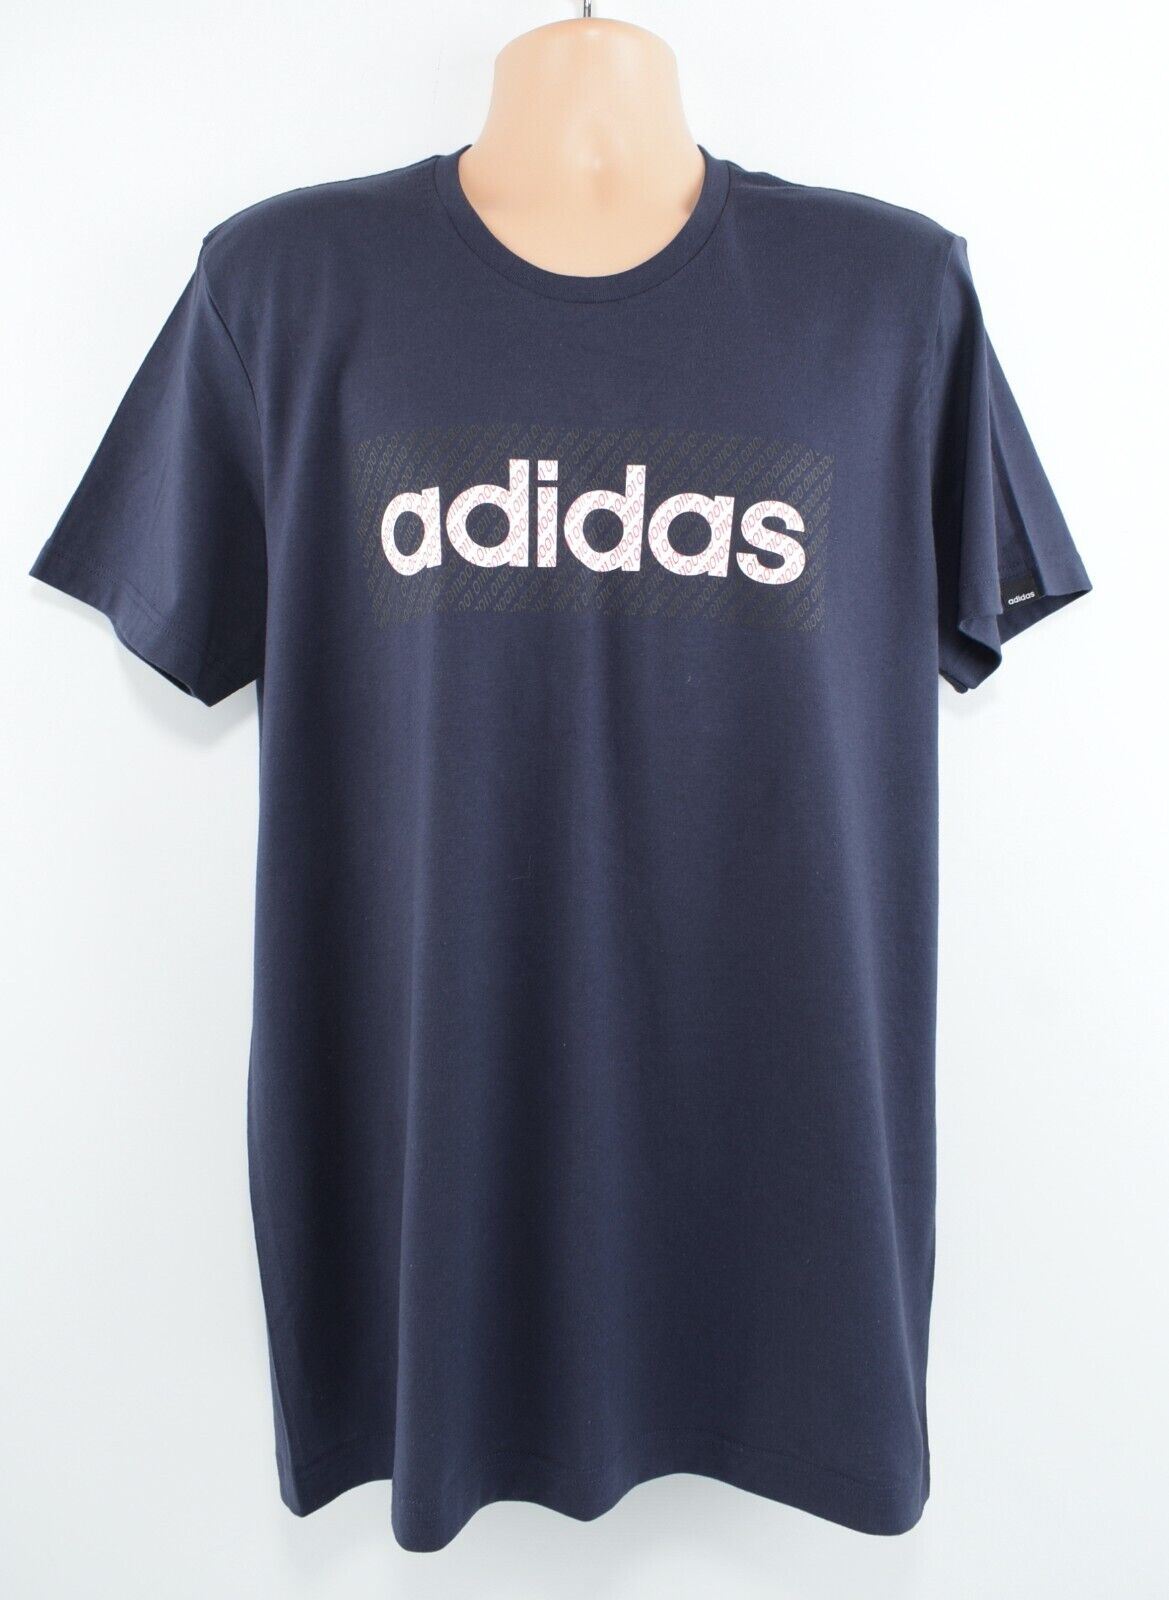 ADIDAS Mens Data Linear Logo Crew Neck T-shirt, Navy Blue, size MEDIUM